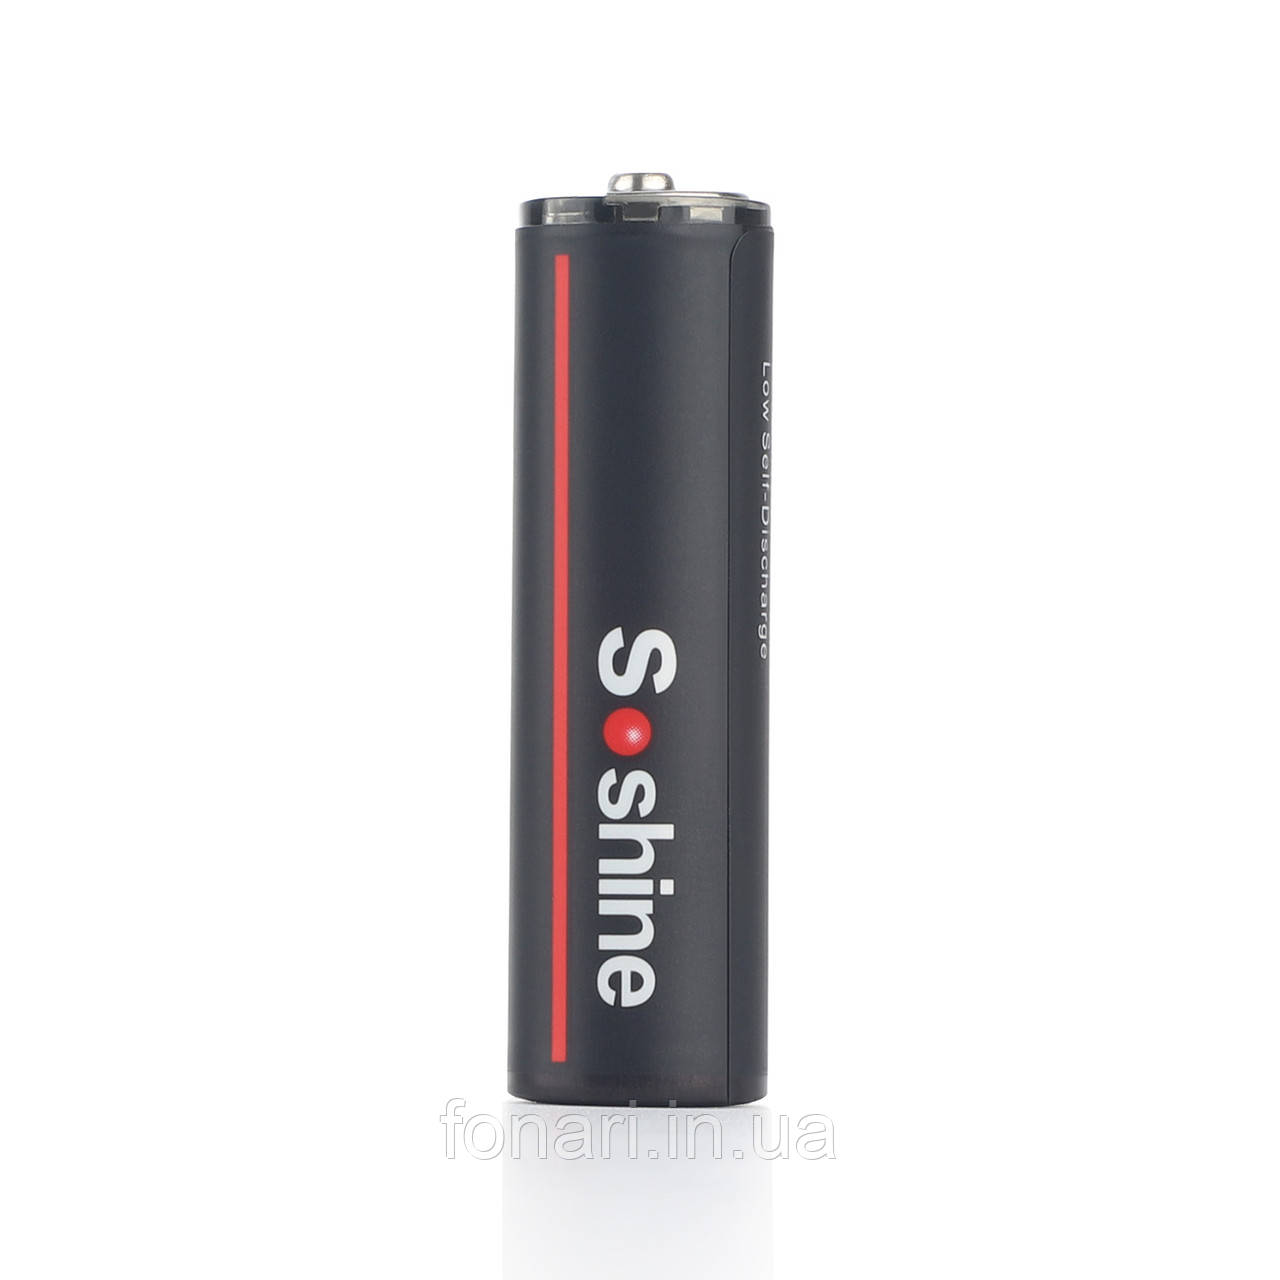 Акумулятор Soshine A / 14500 Li-Ion 1,5V з зарядом USB Type-C, фото 1